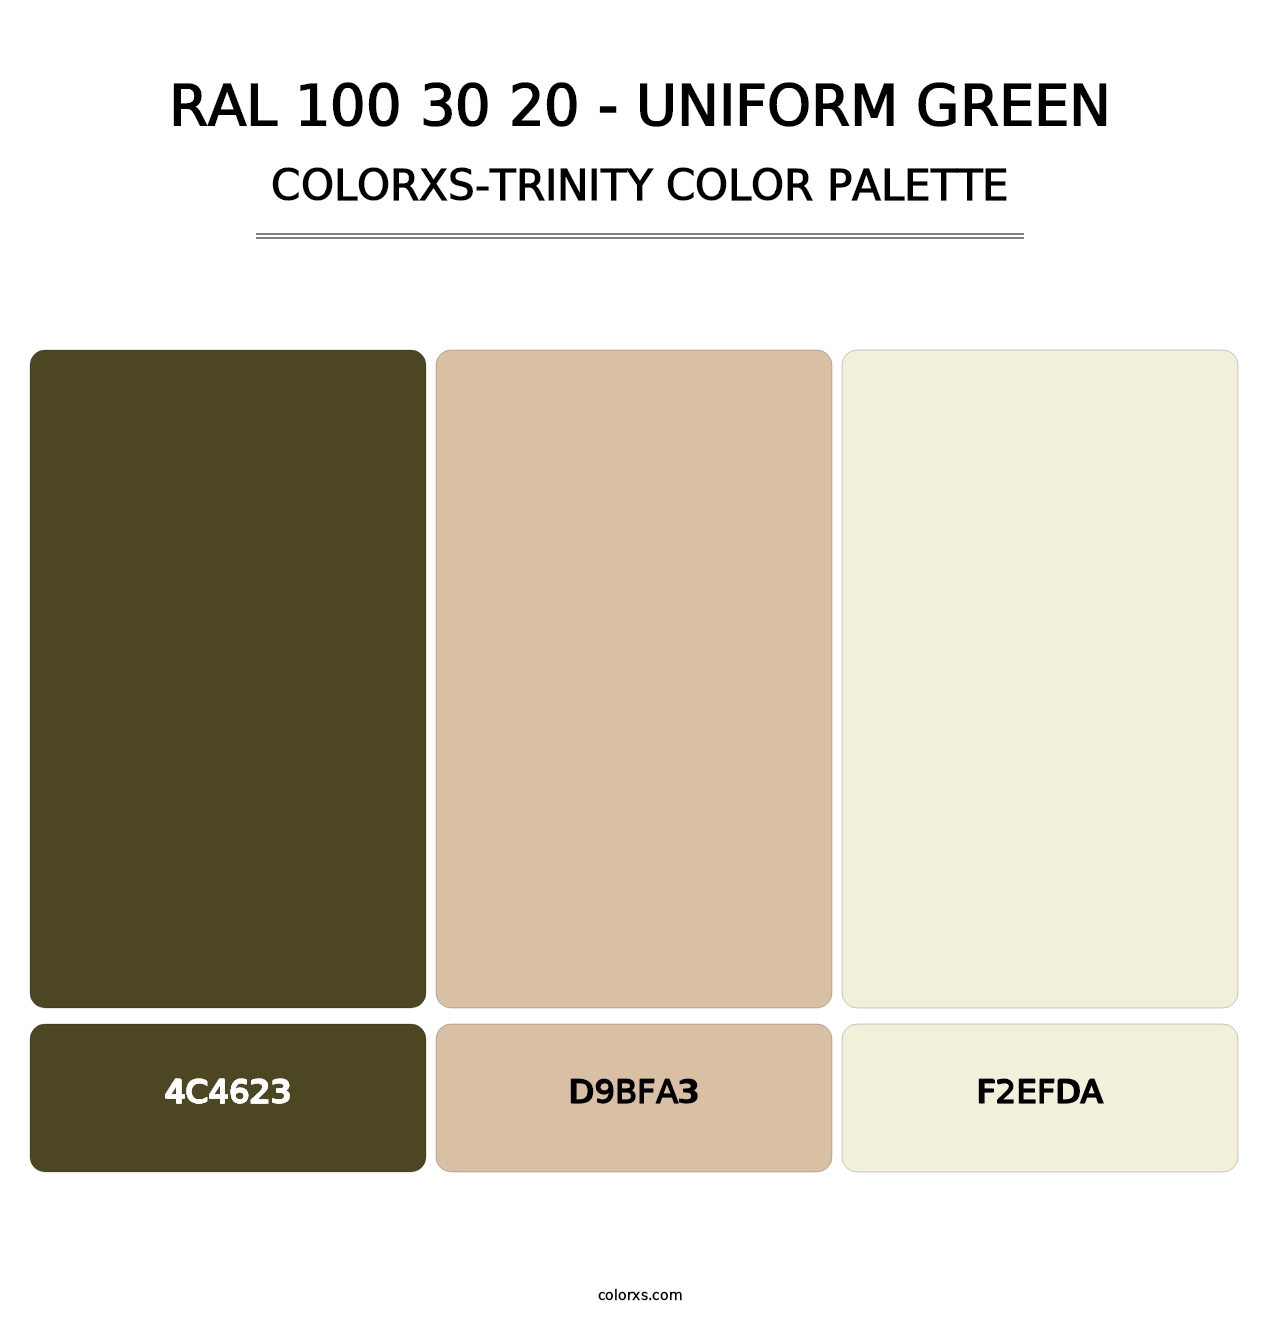 RAL 100 30 20 - Uniform Green - Colorxs Trinity Palette